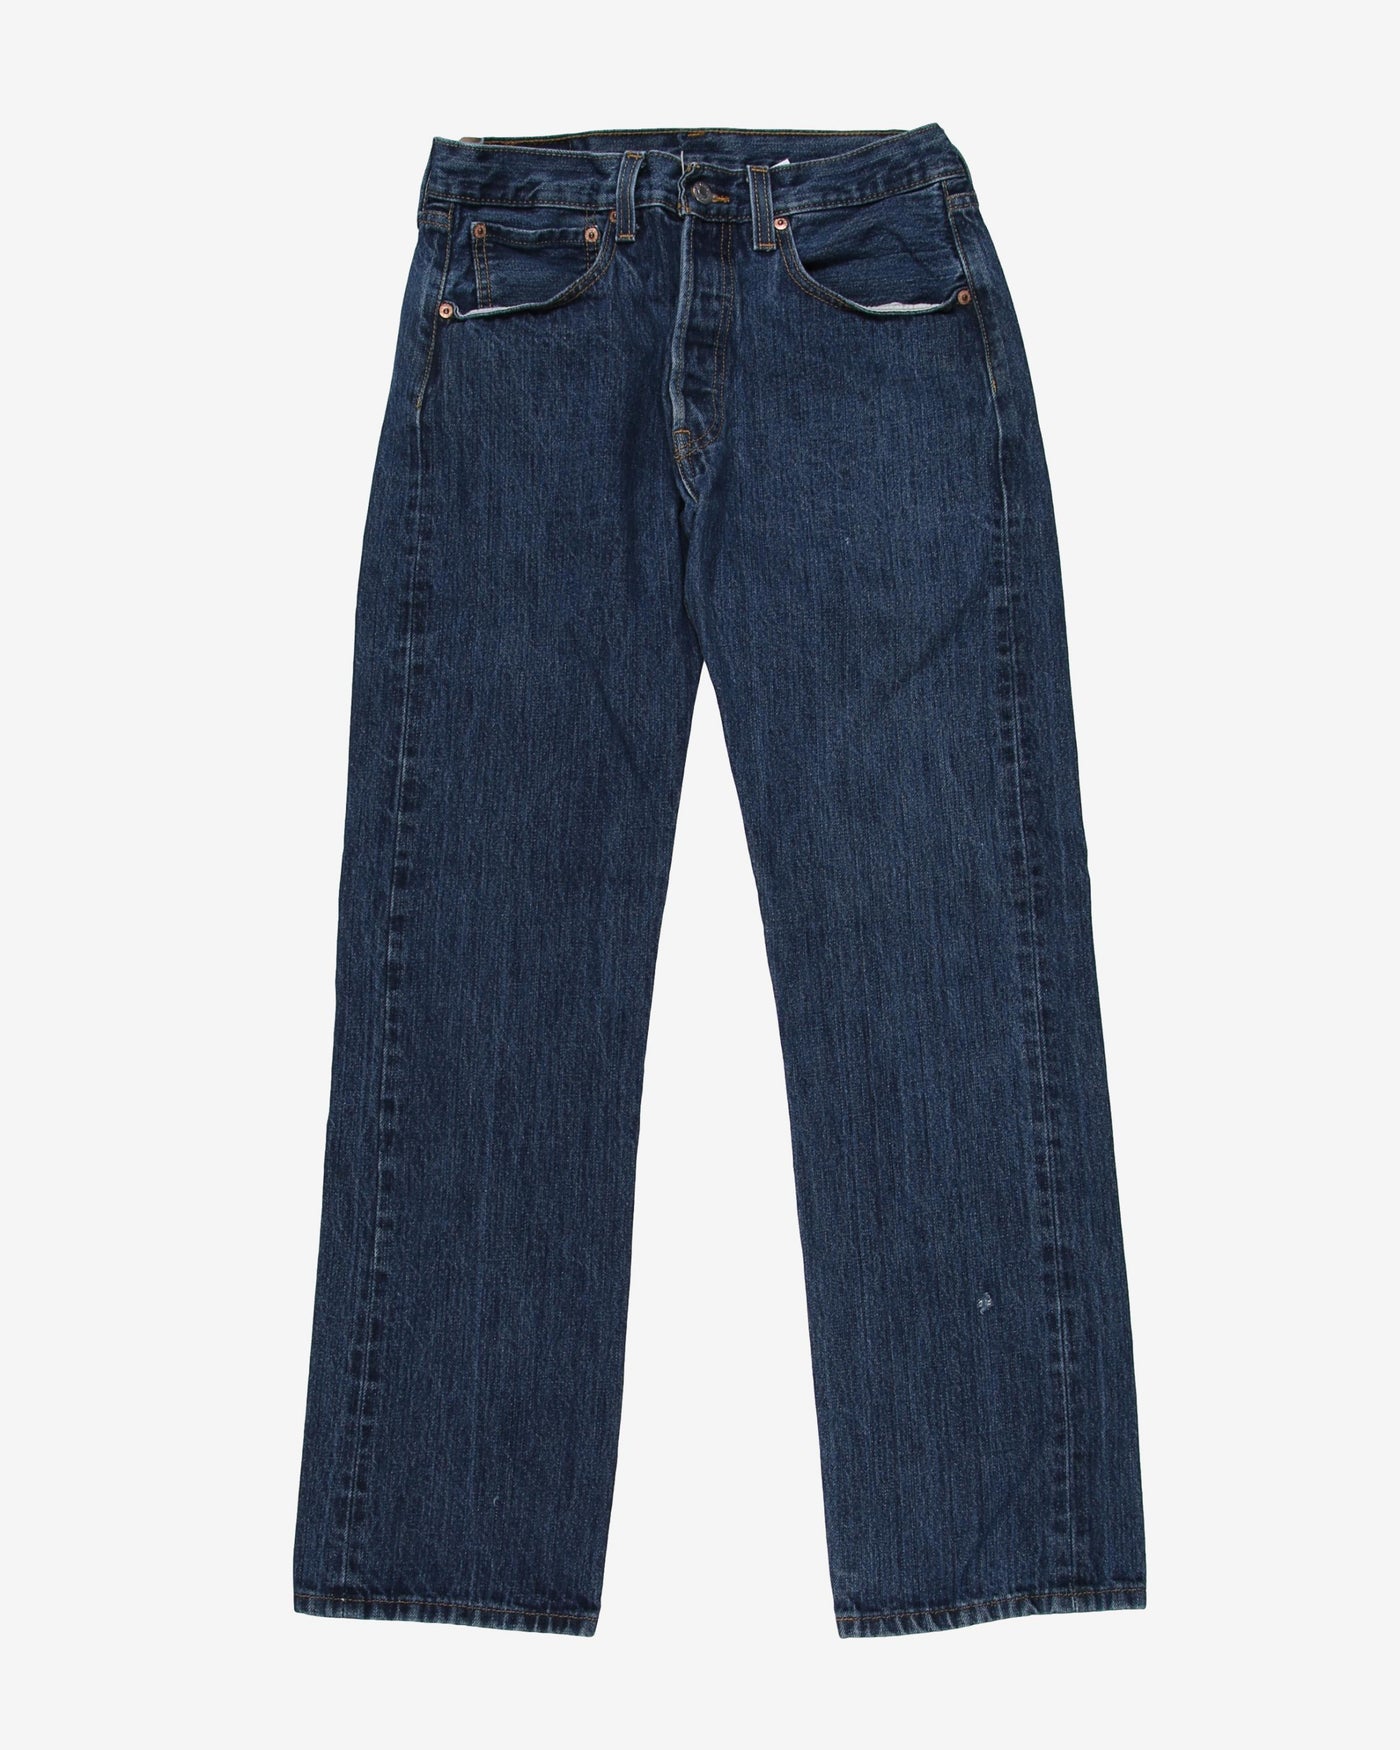 levis 501 mid wash indigo denim jeans - w30 l31